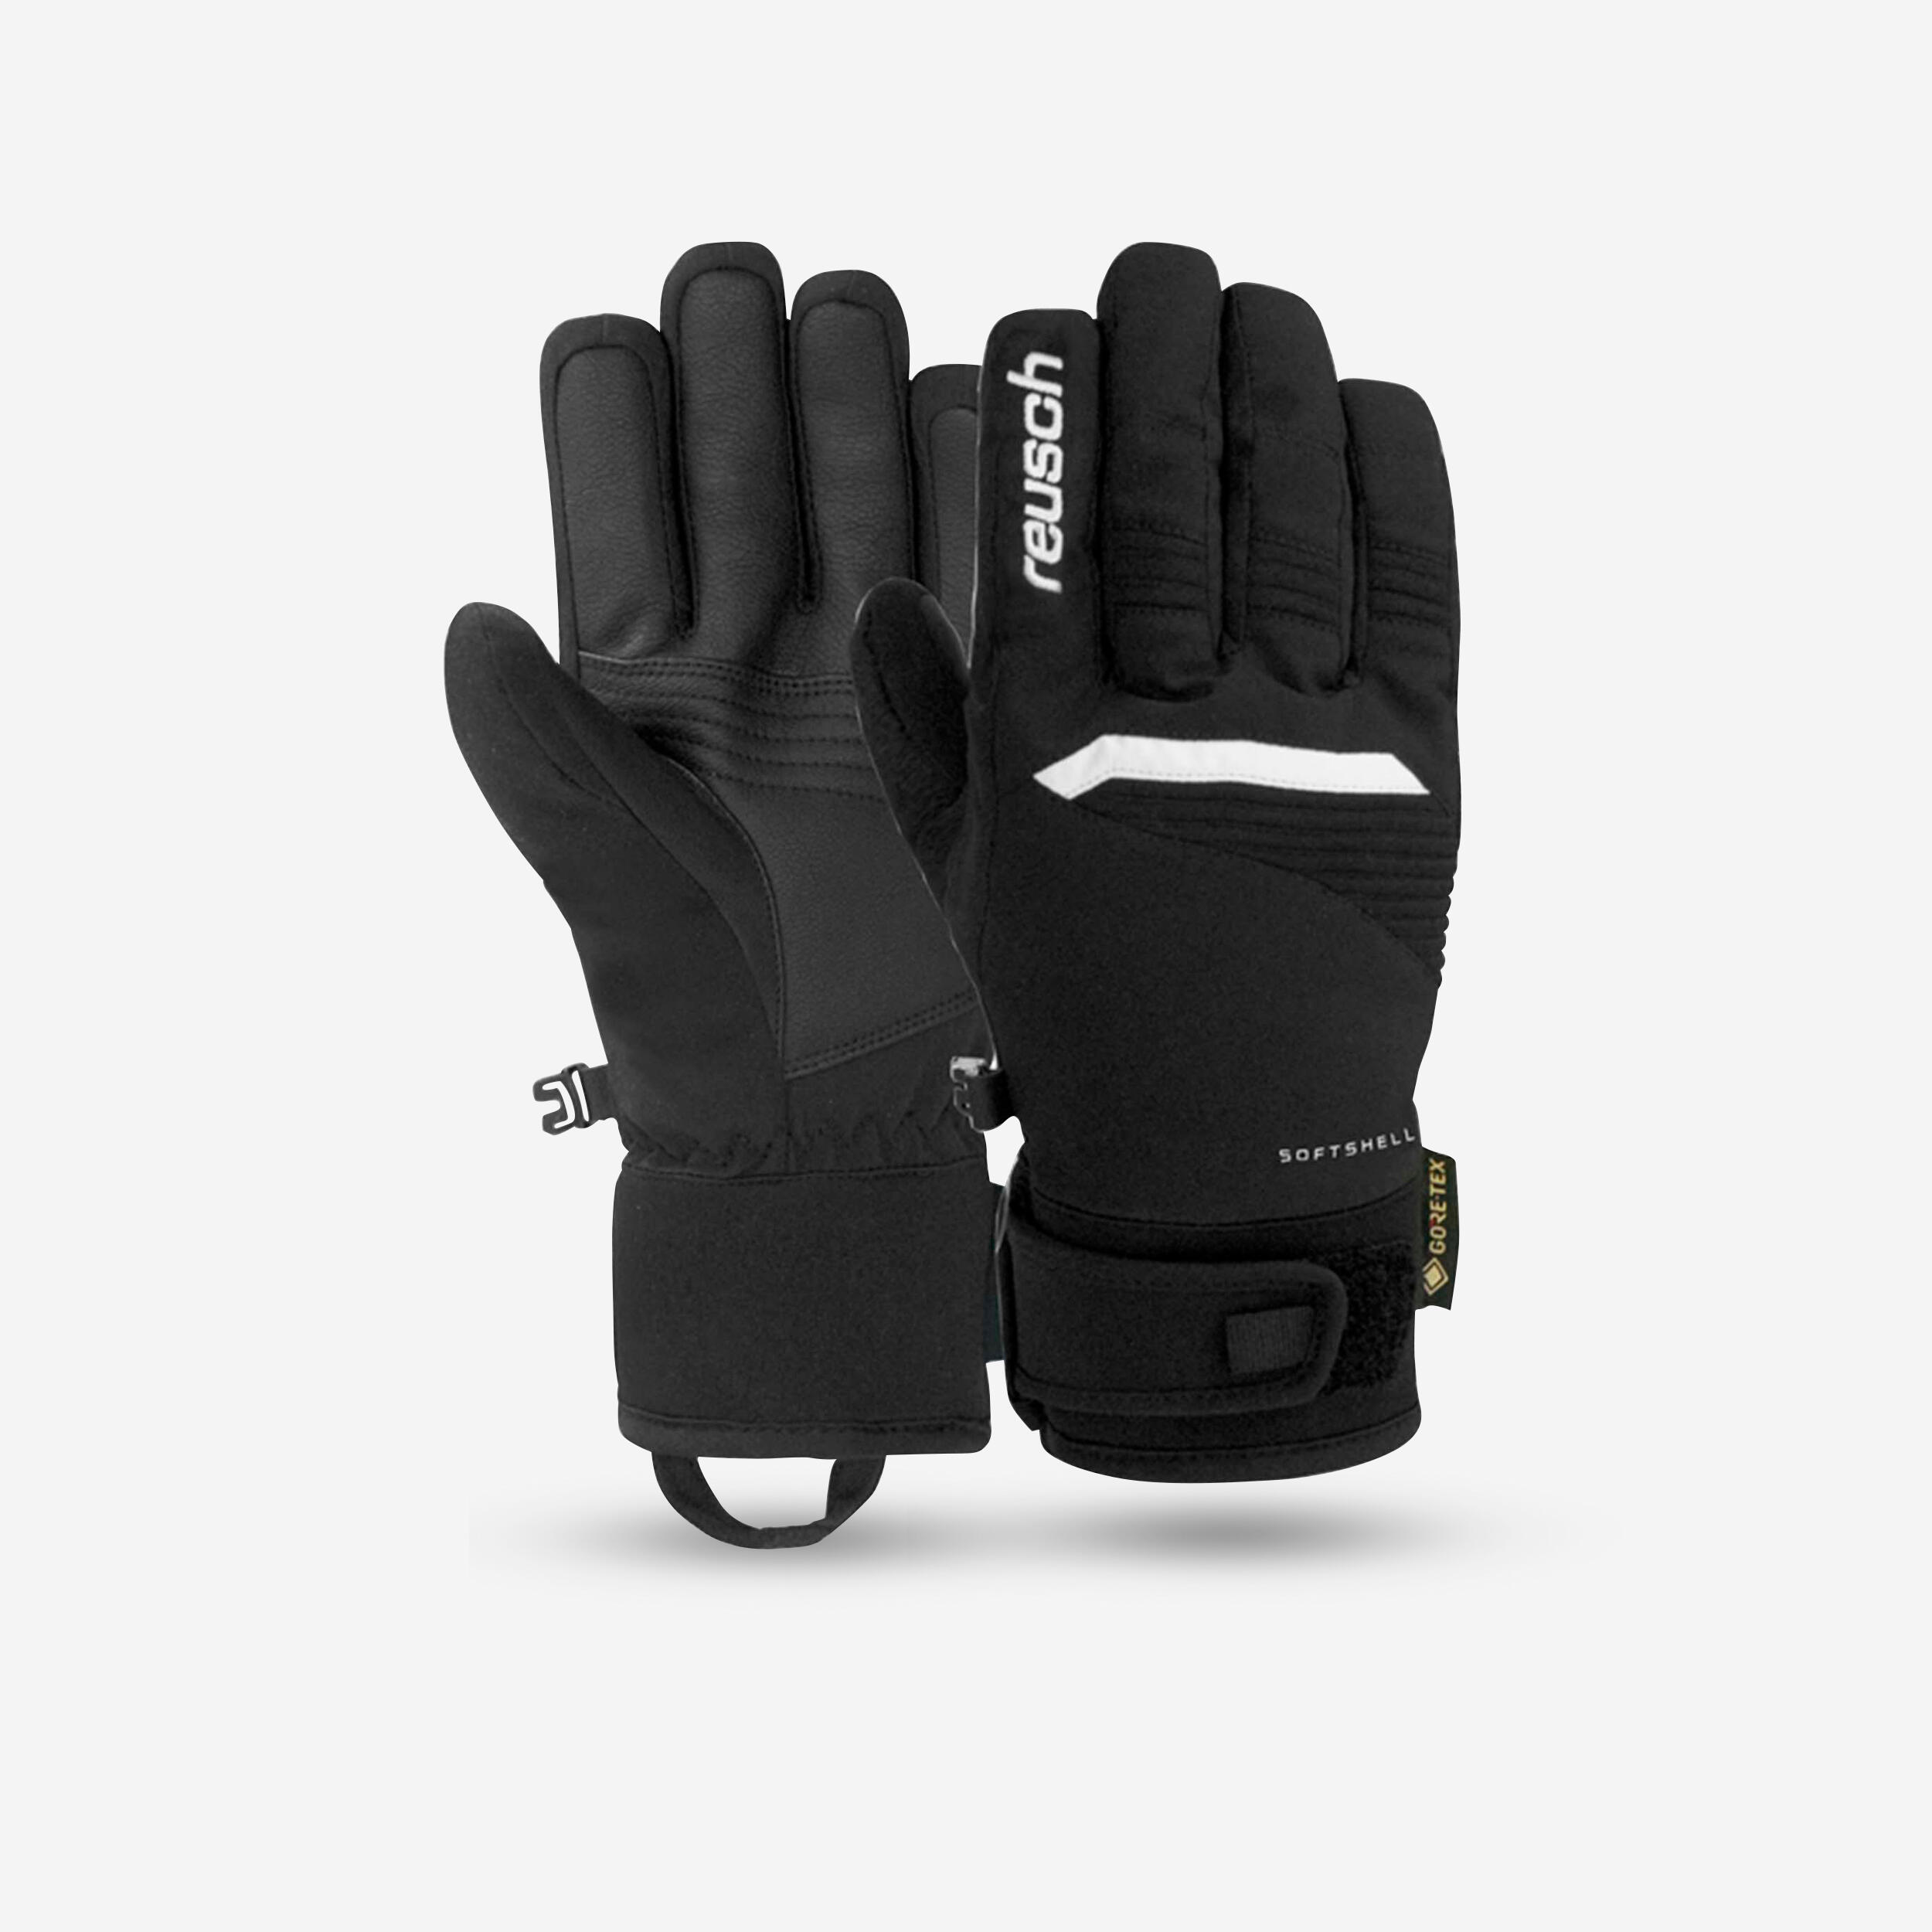 Dynafit Handschuhe Damen und Herren Skihandschuhe Fingerhandschuhe 